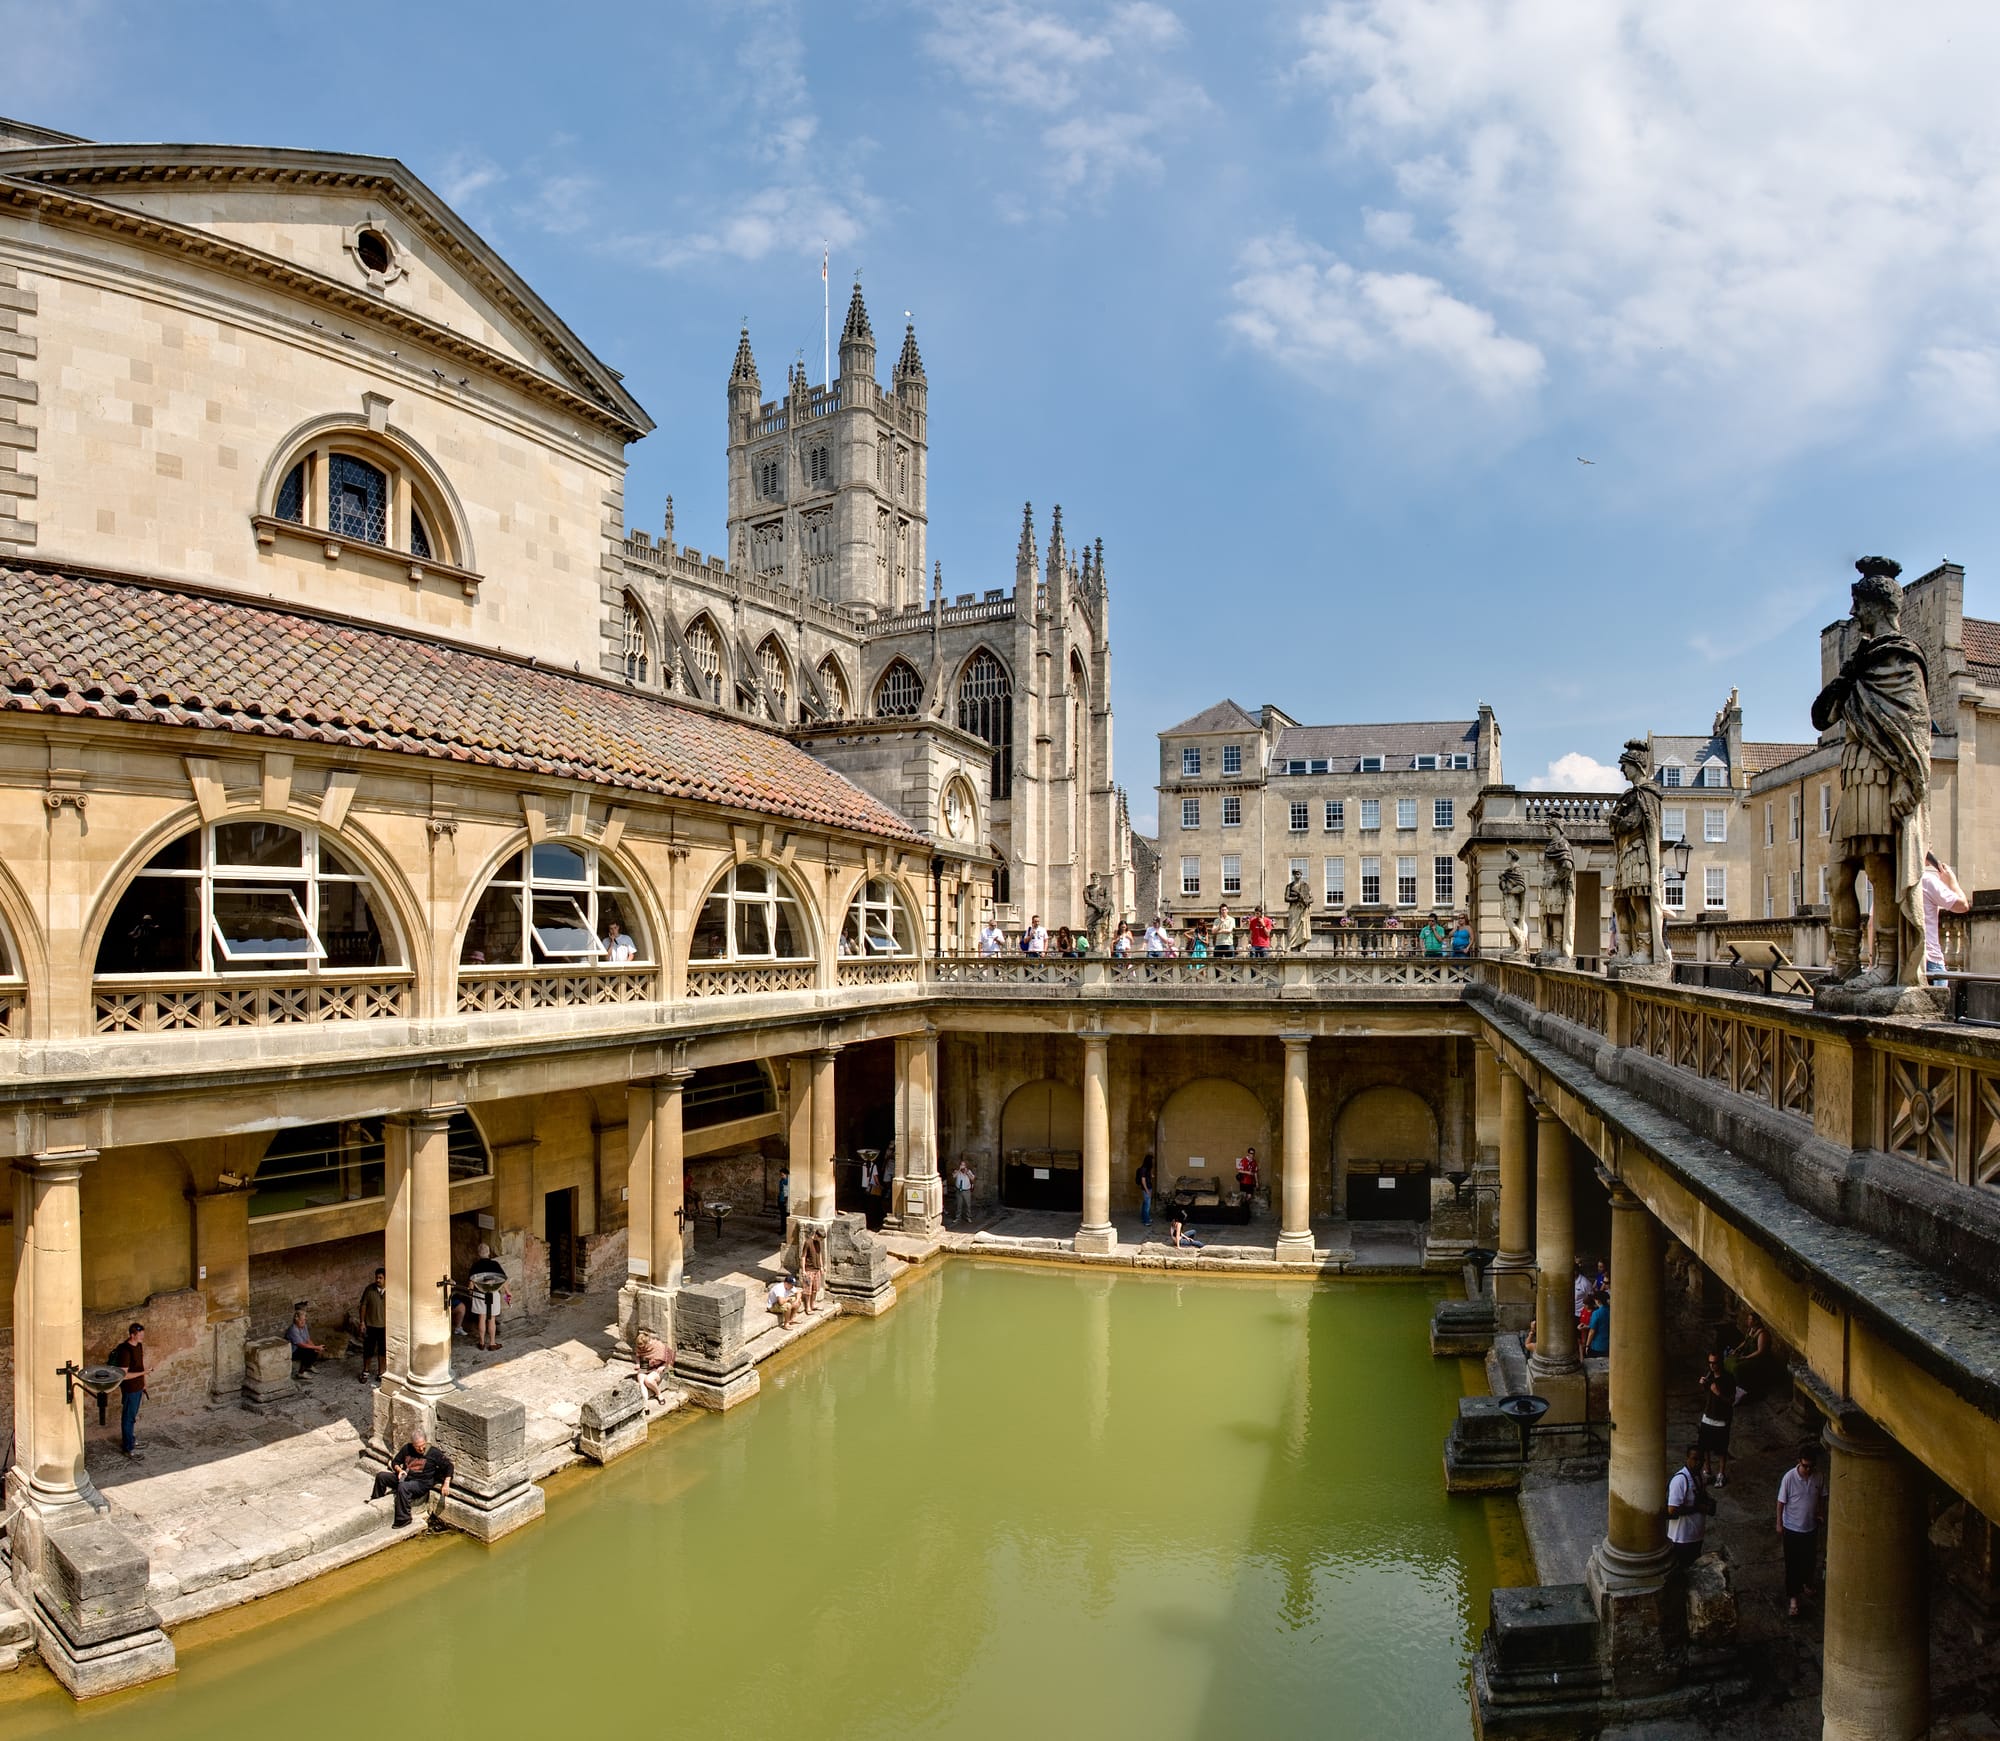 The Roman Baths (Thermae) of Bath, England